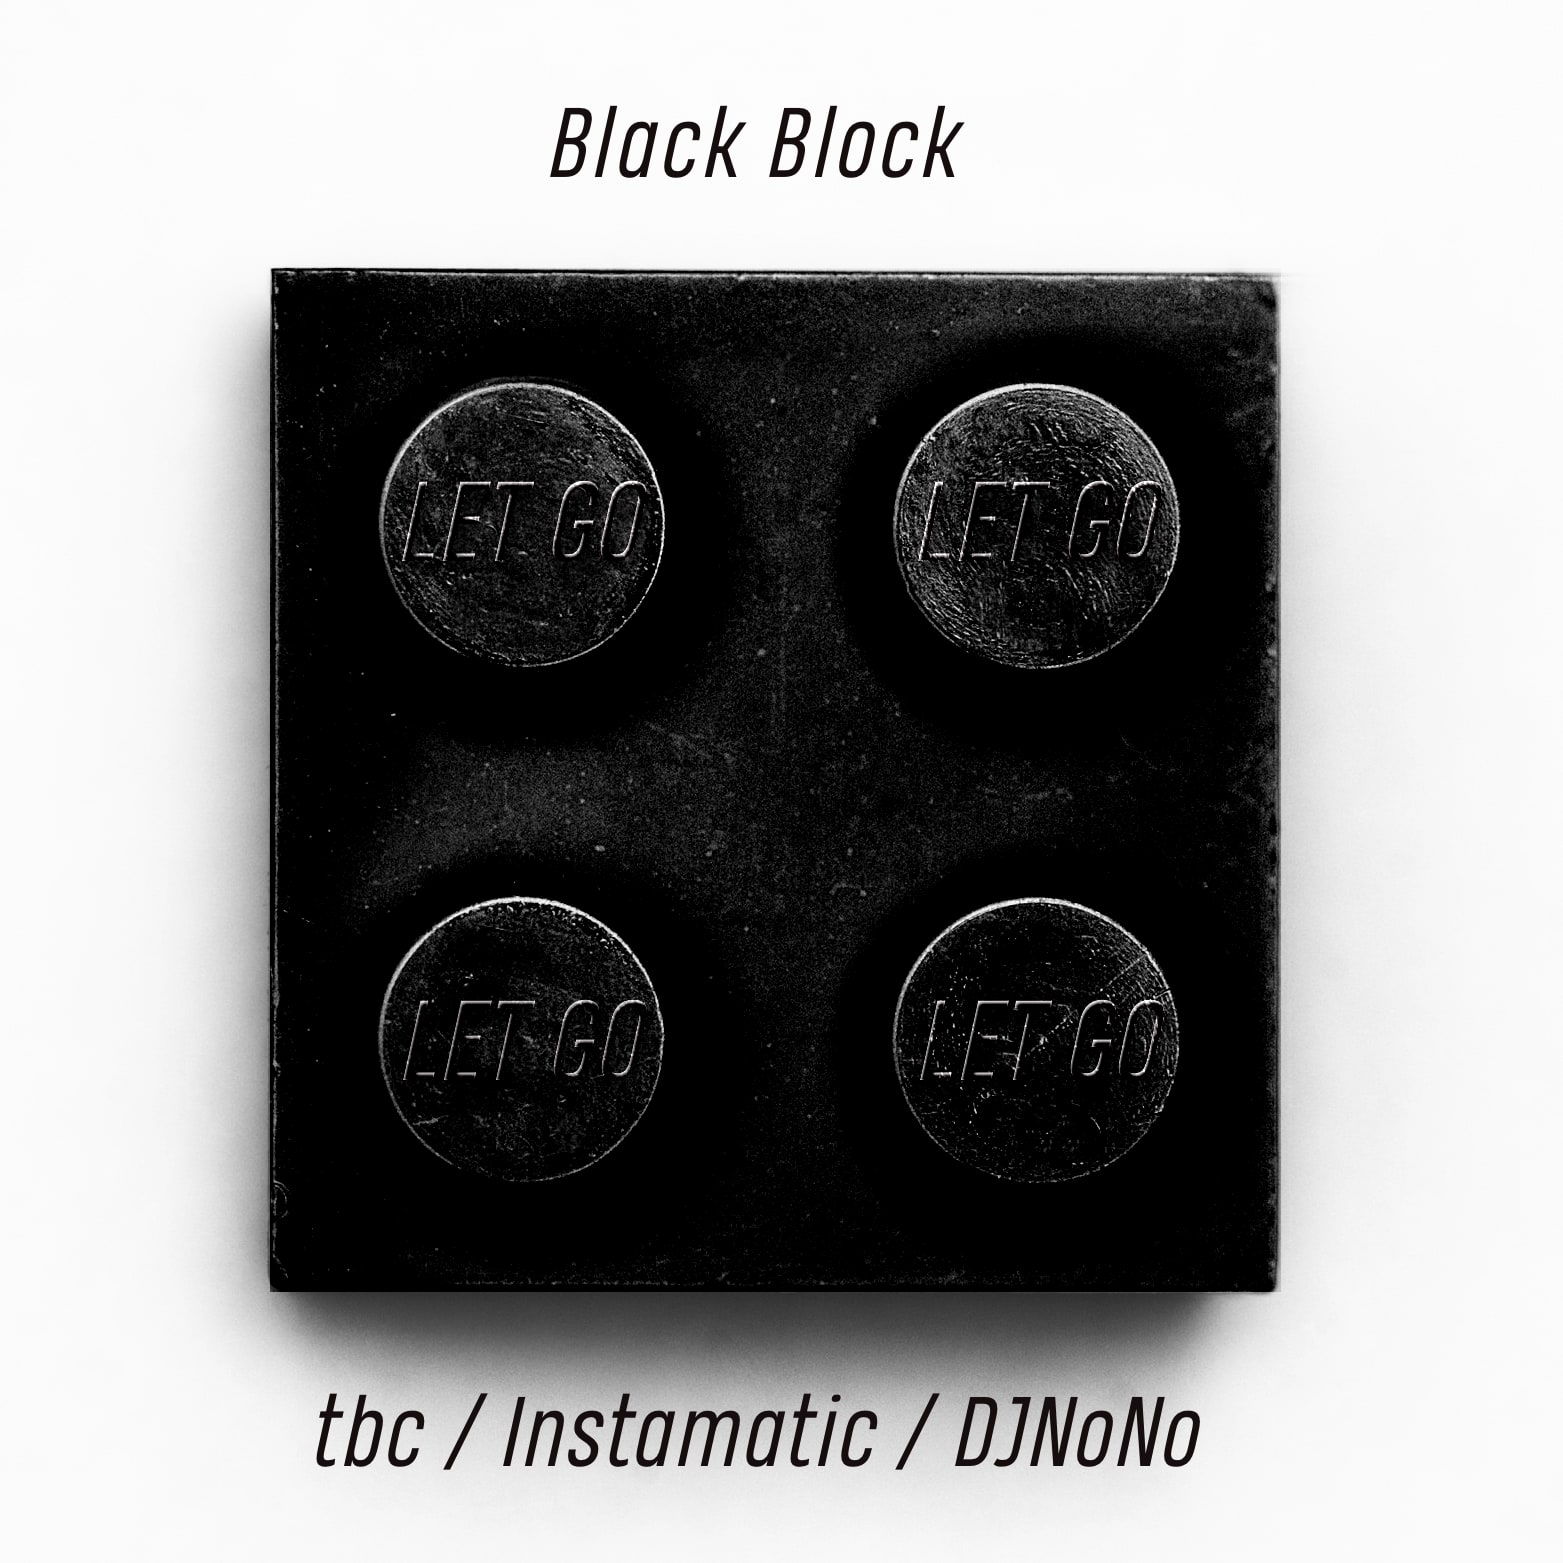 Black Block mashup album